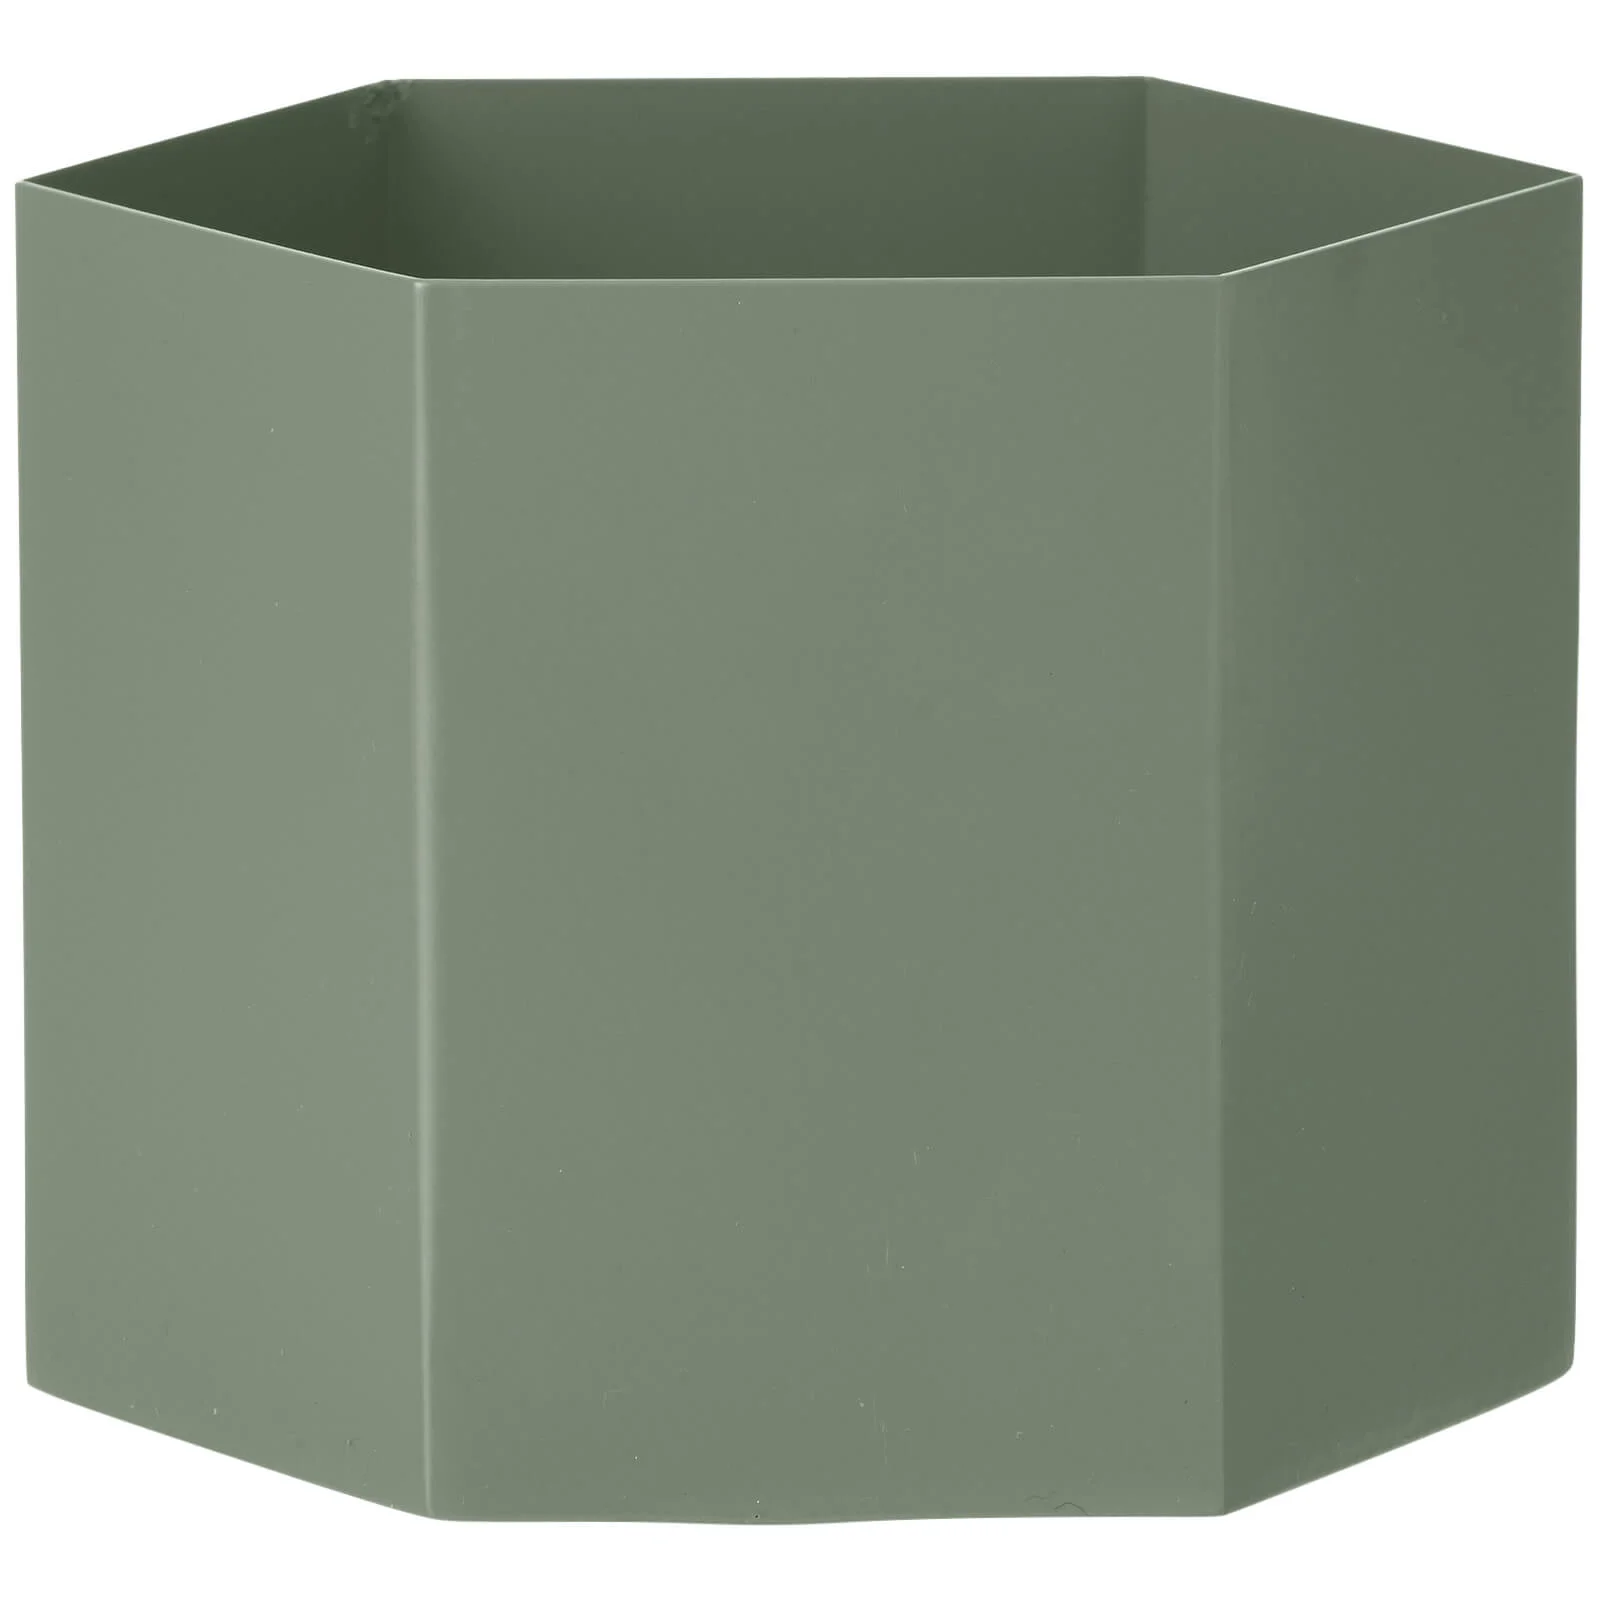 Ferm Living Hexagon Pot - Extra Large - Dusty Green Image 1